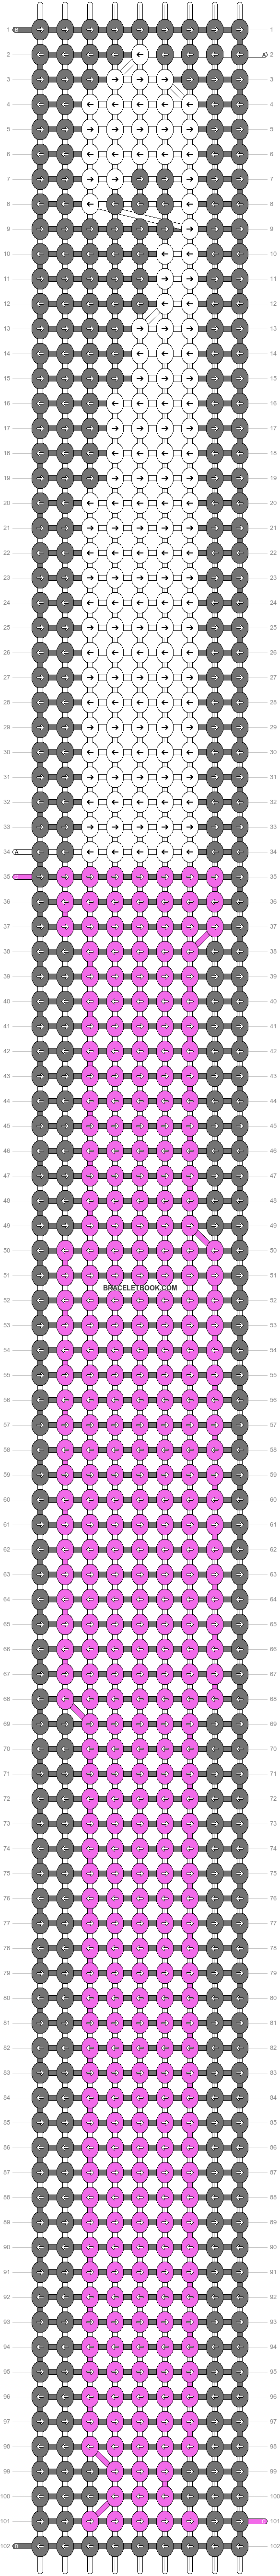 Alpha pattern #52753 variation #106380 pattern